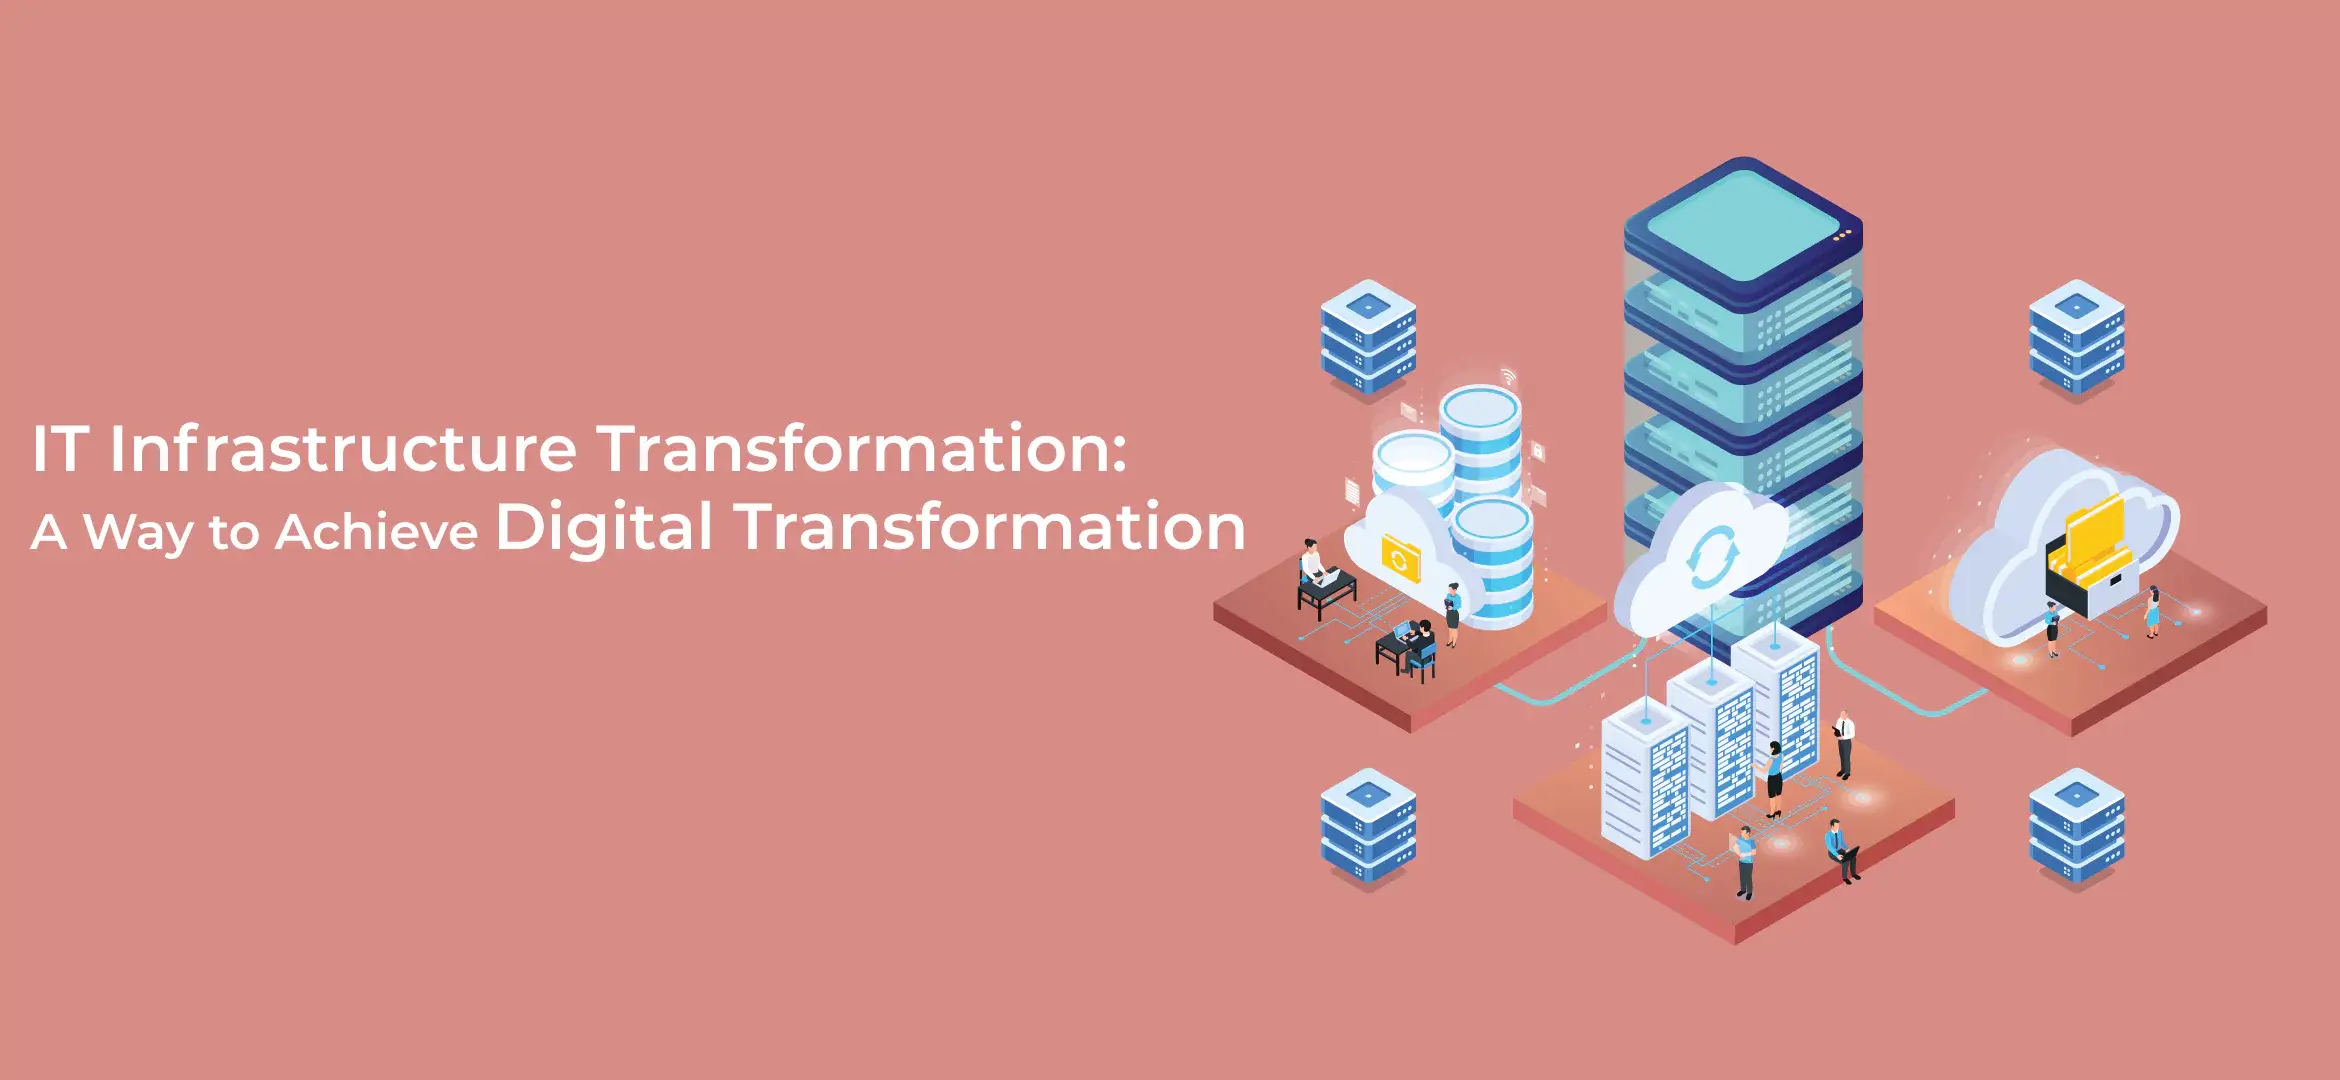 1709793416IT Infrastructure Transformation A Way to Achieve Digital Transformation.webp